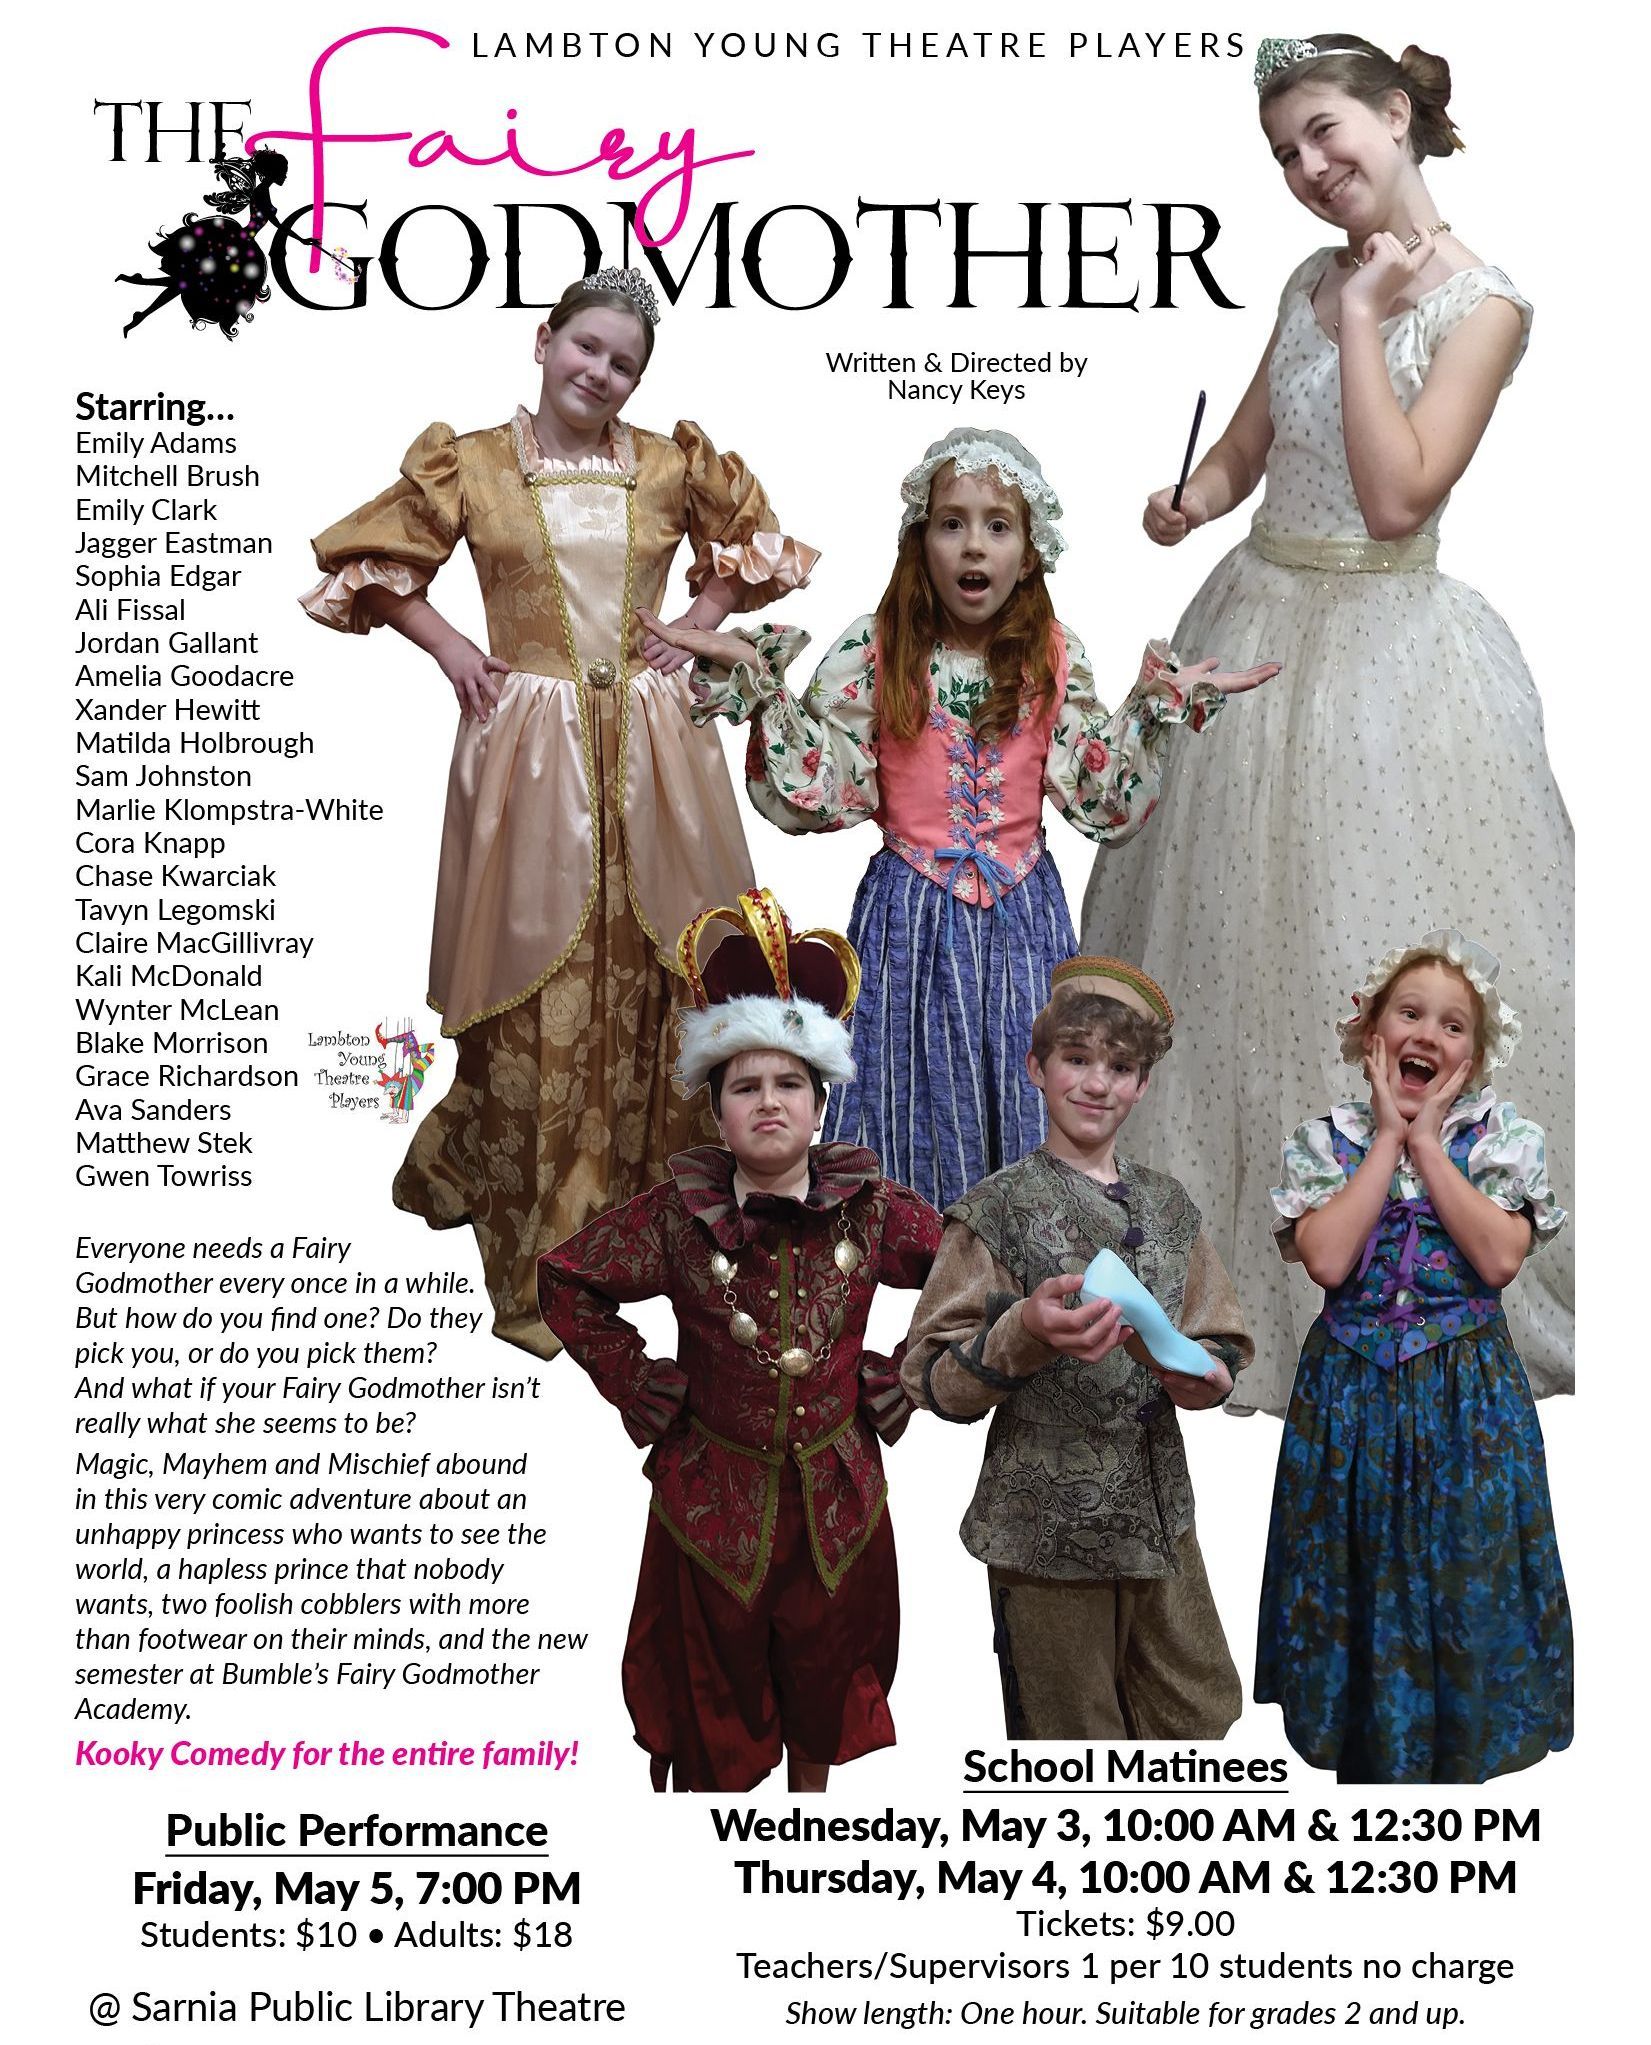 The Fairy Godmother Show Dates! A kooky comedy